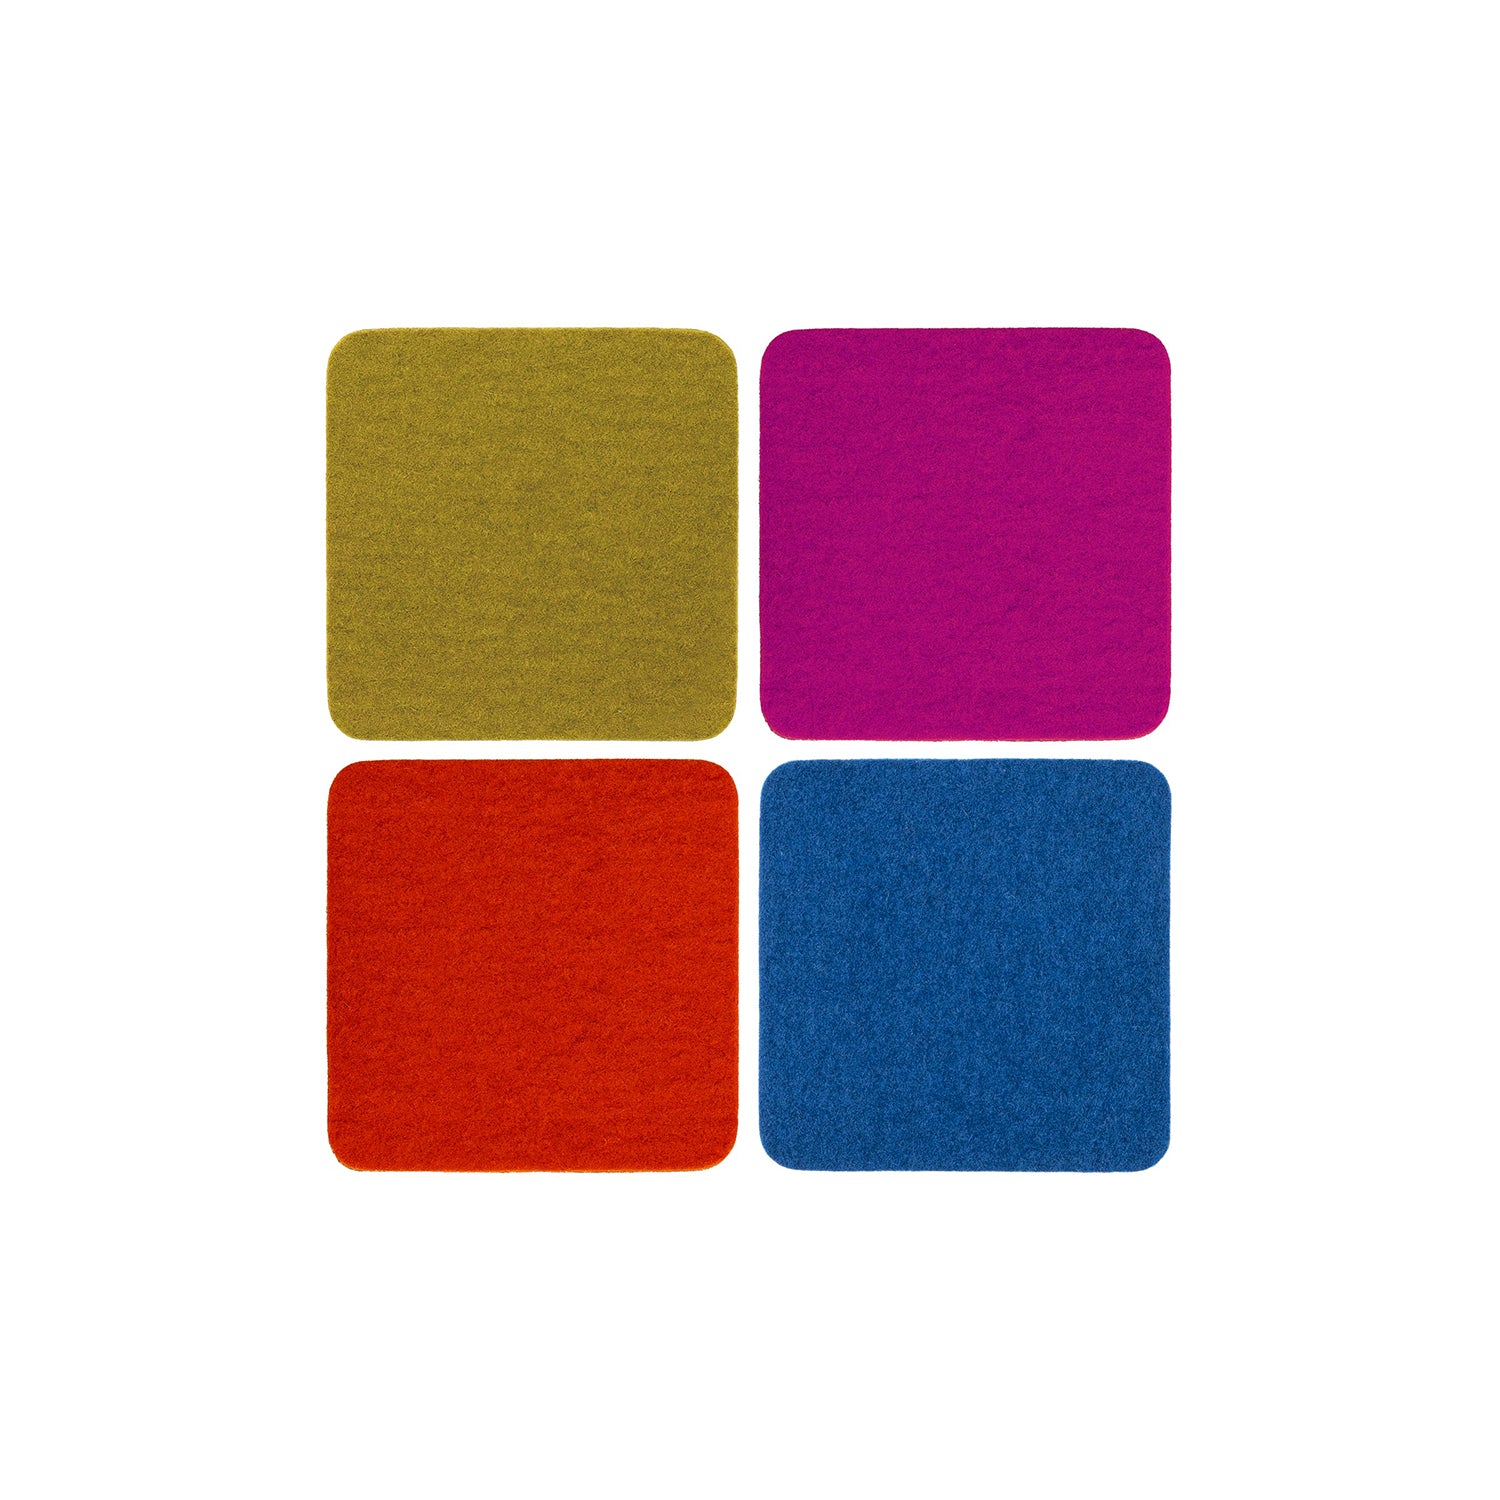 Bierfilzl Square Felt Coaster 4-pack (choose color) Electric